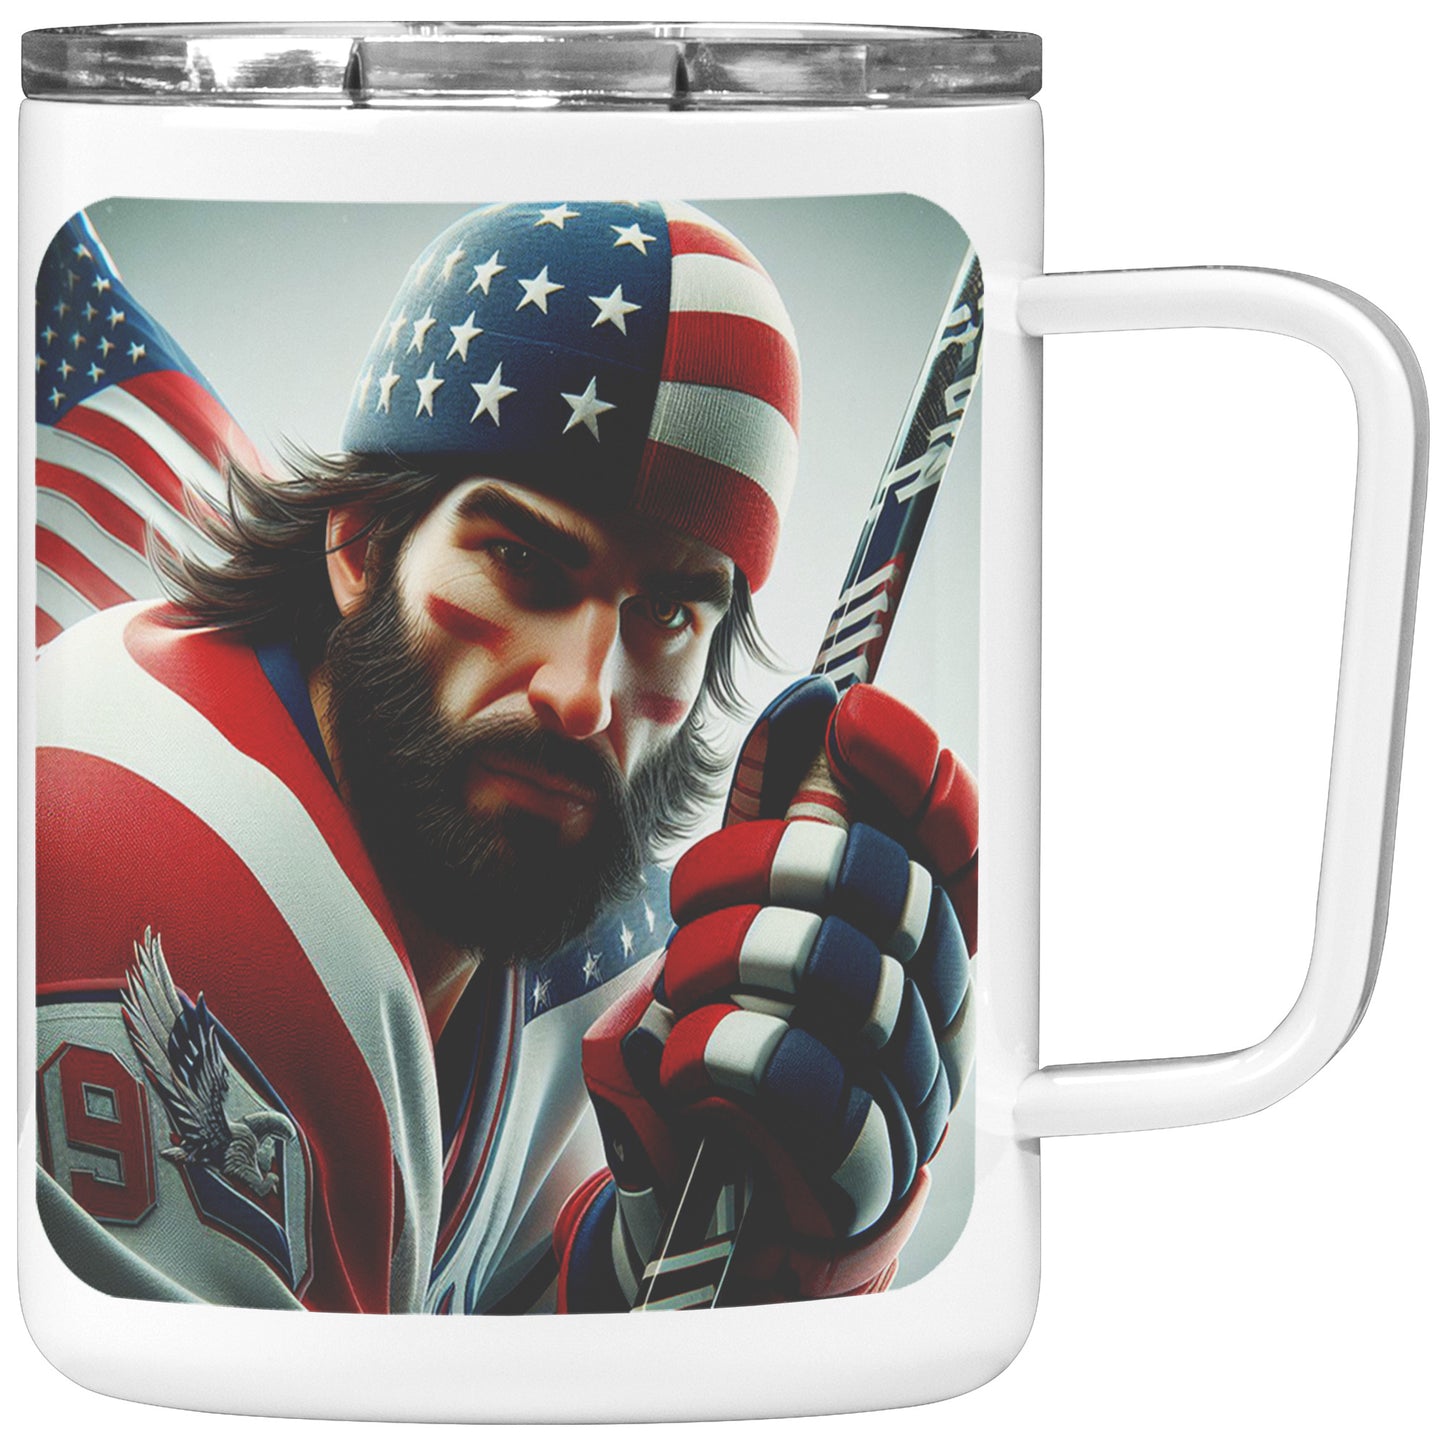 Man Ice Hockey Player - Coffee Mug #5